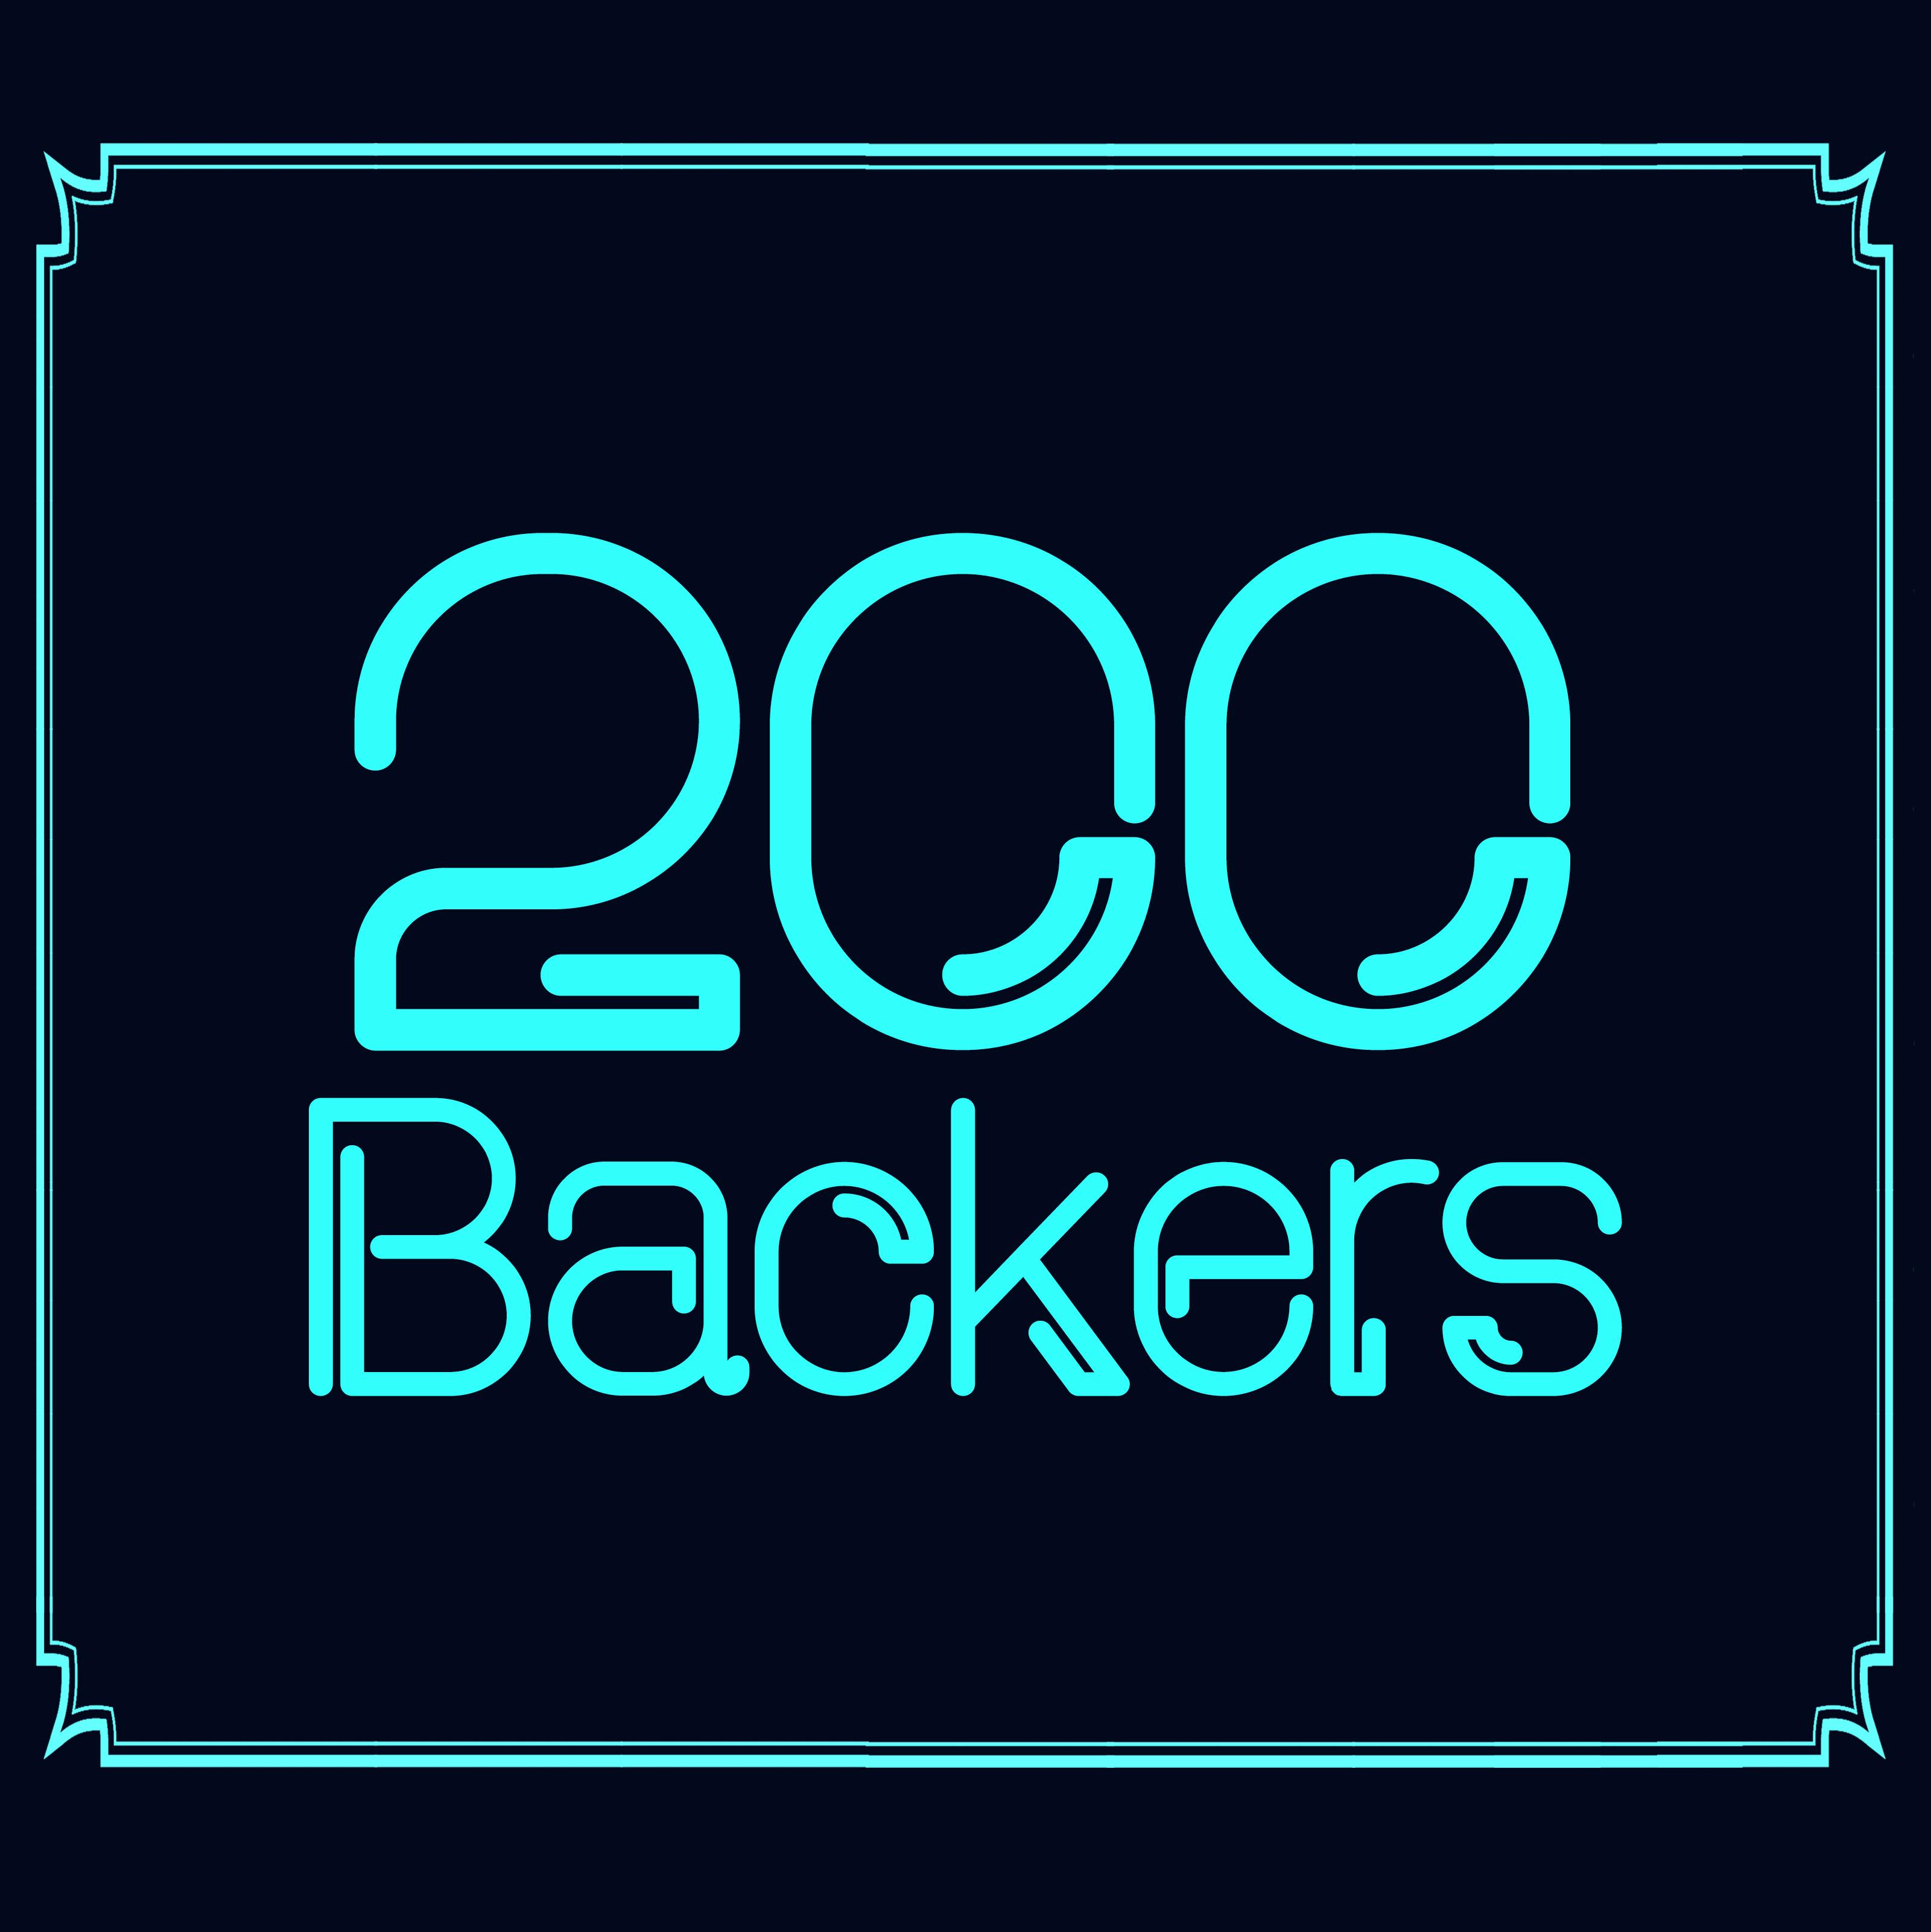 Reach 200 backers